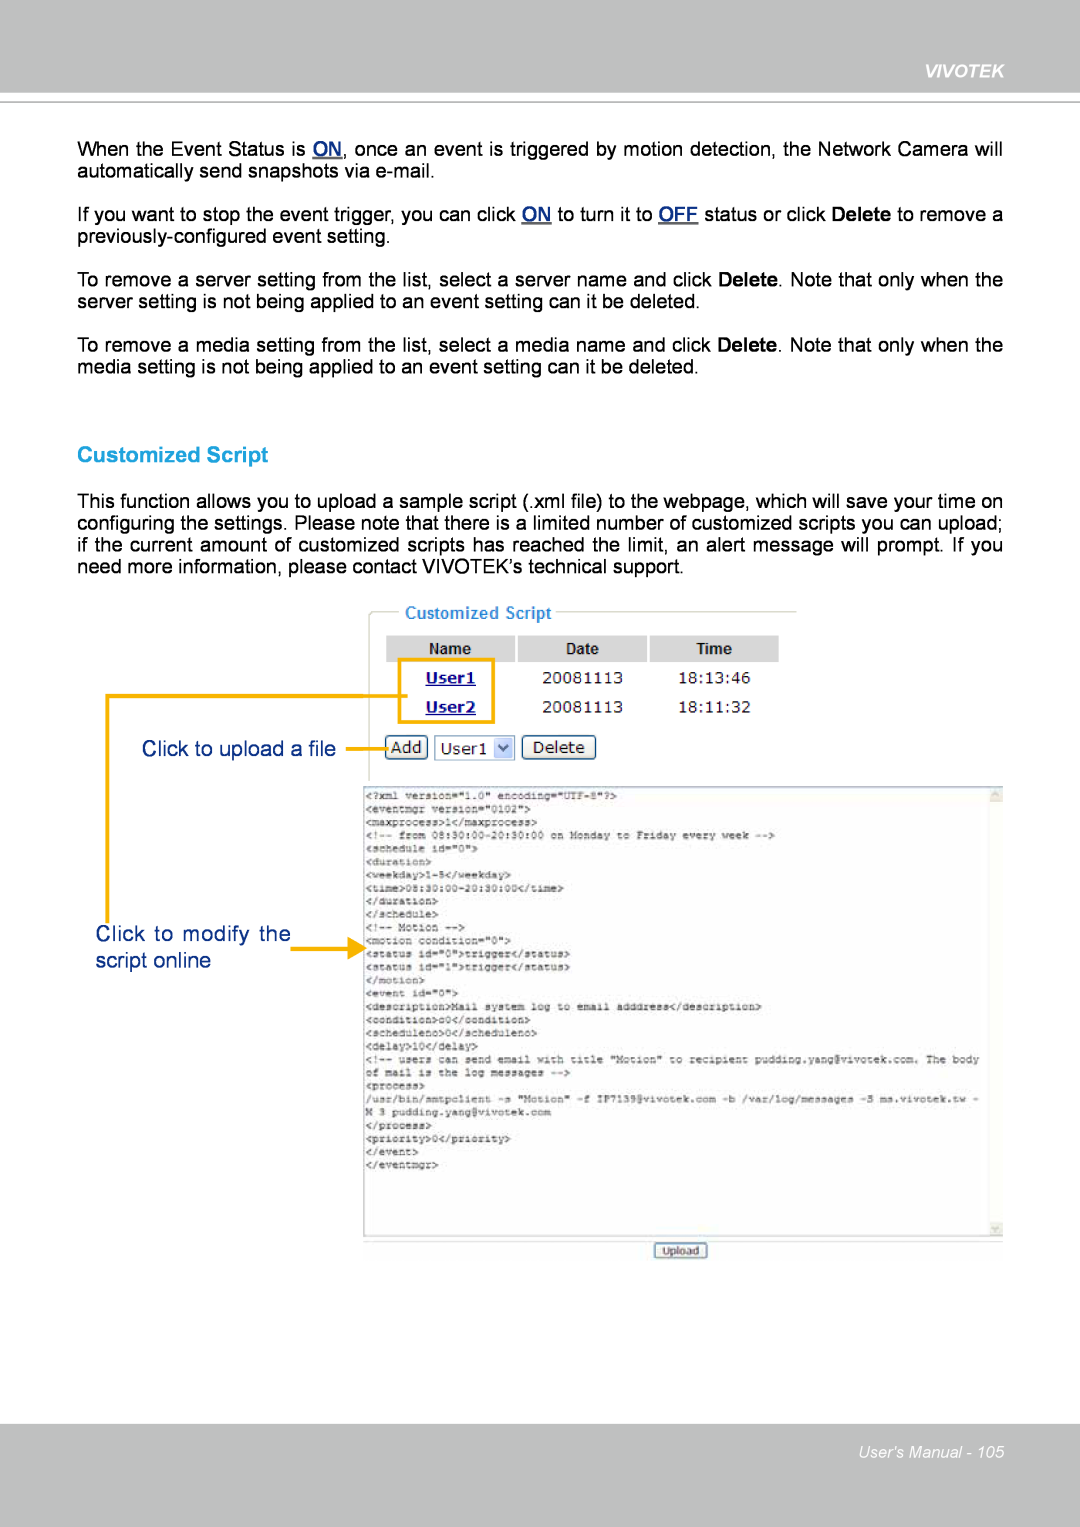 Vivotek FE8171V manual Customized Script, Click to upload a file, Click to modify the script online 